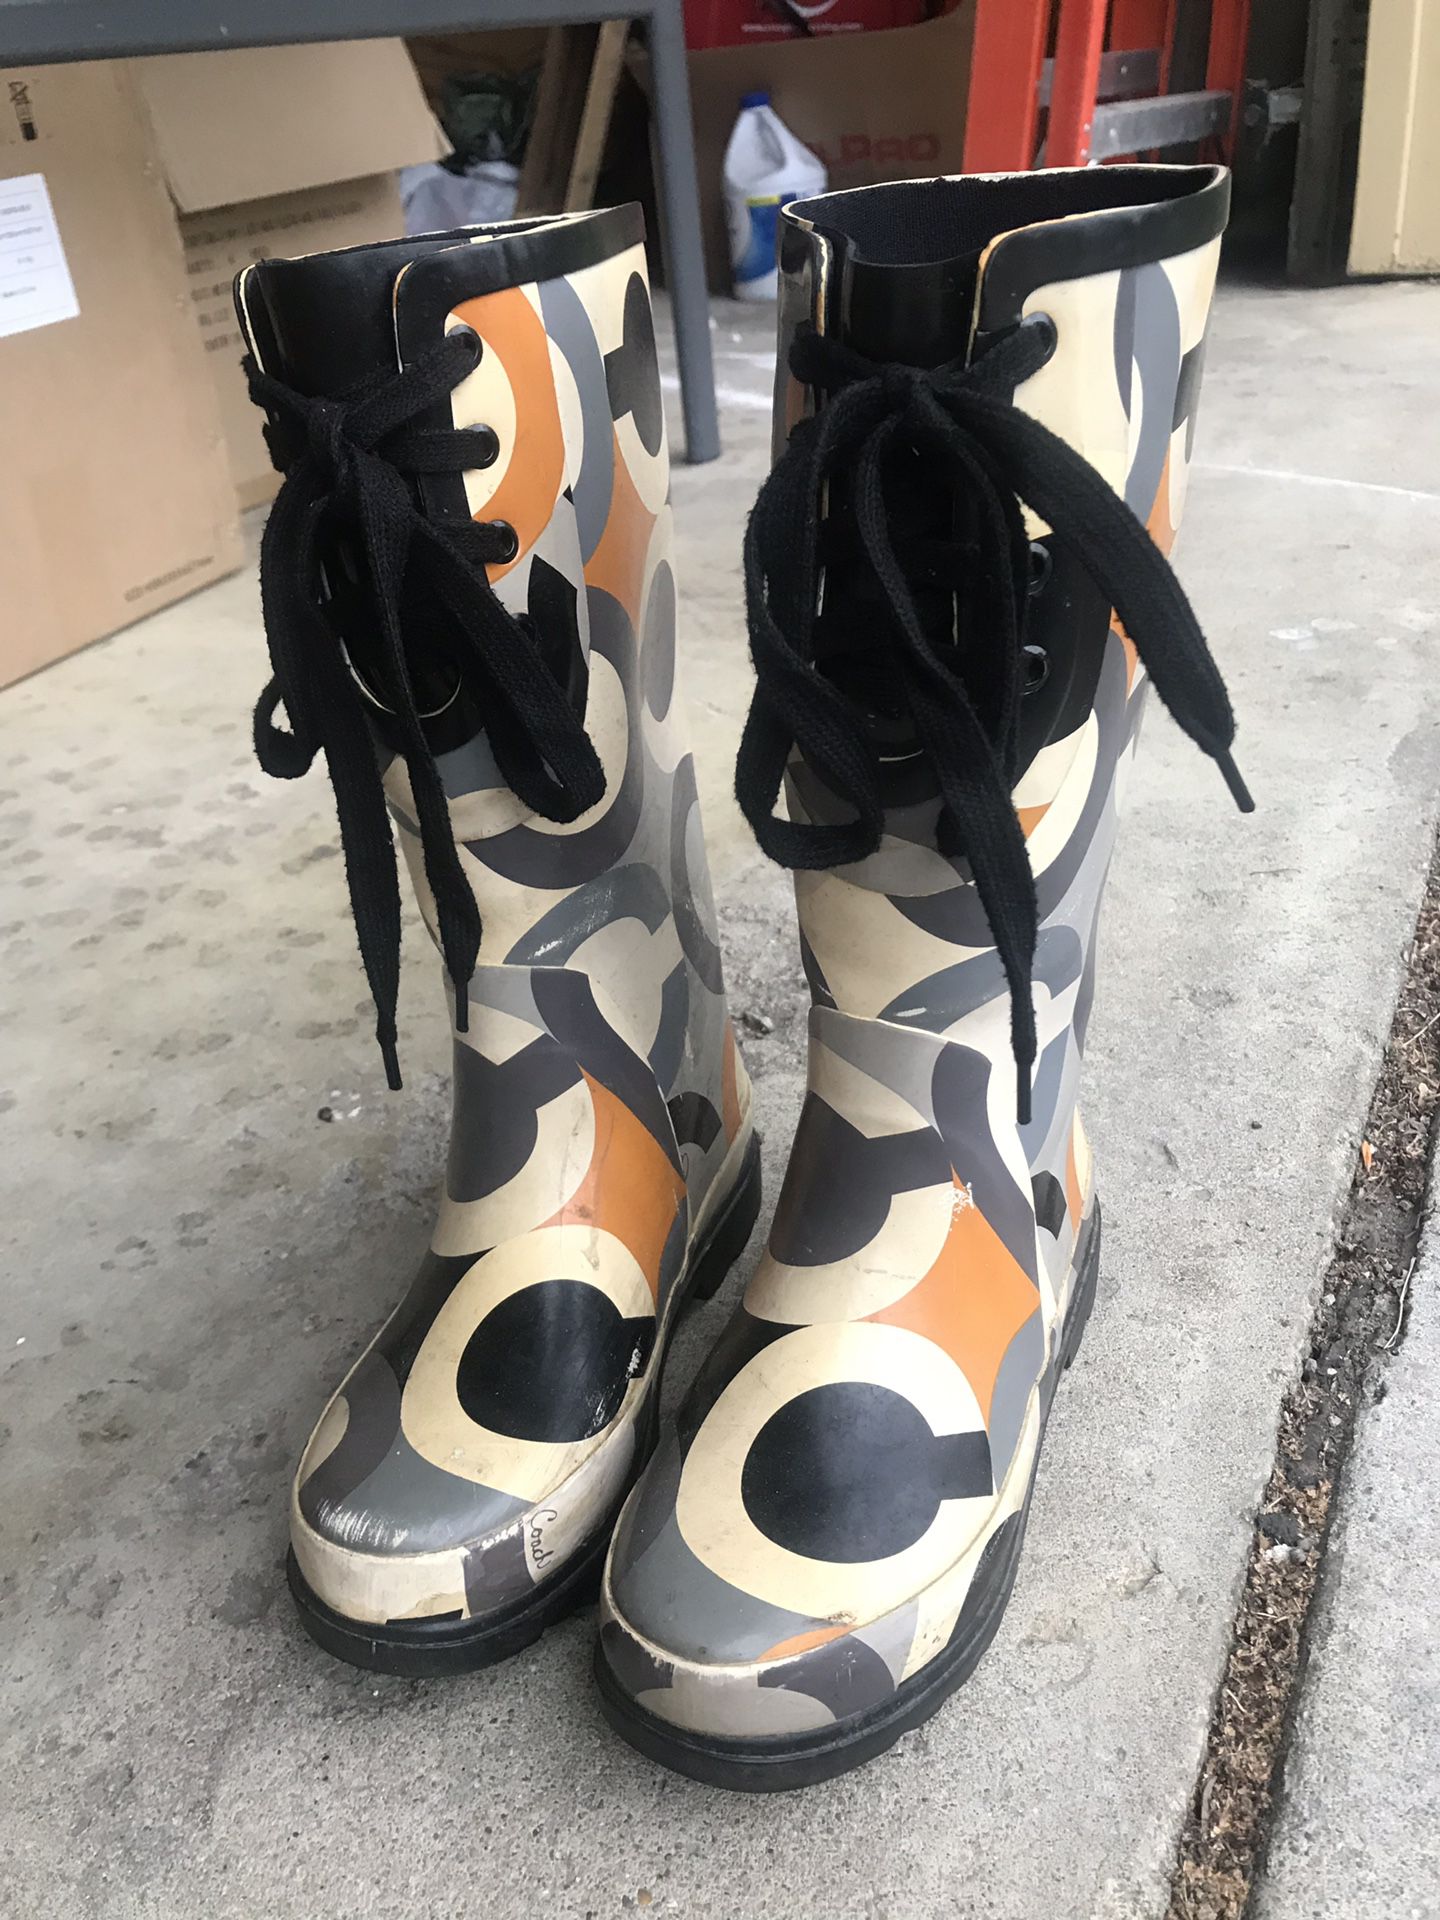 Women’s size 5 Coach rain boots